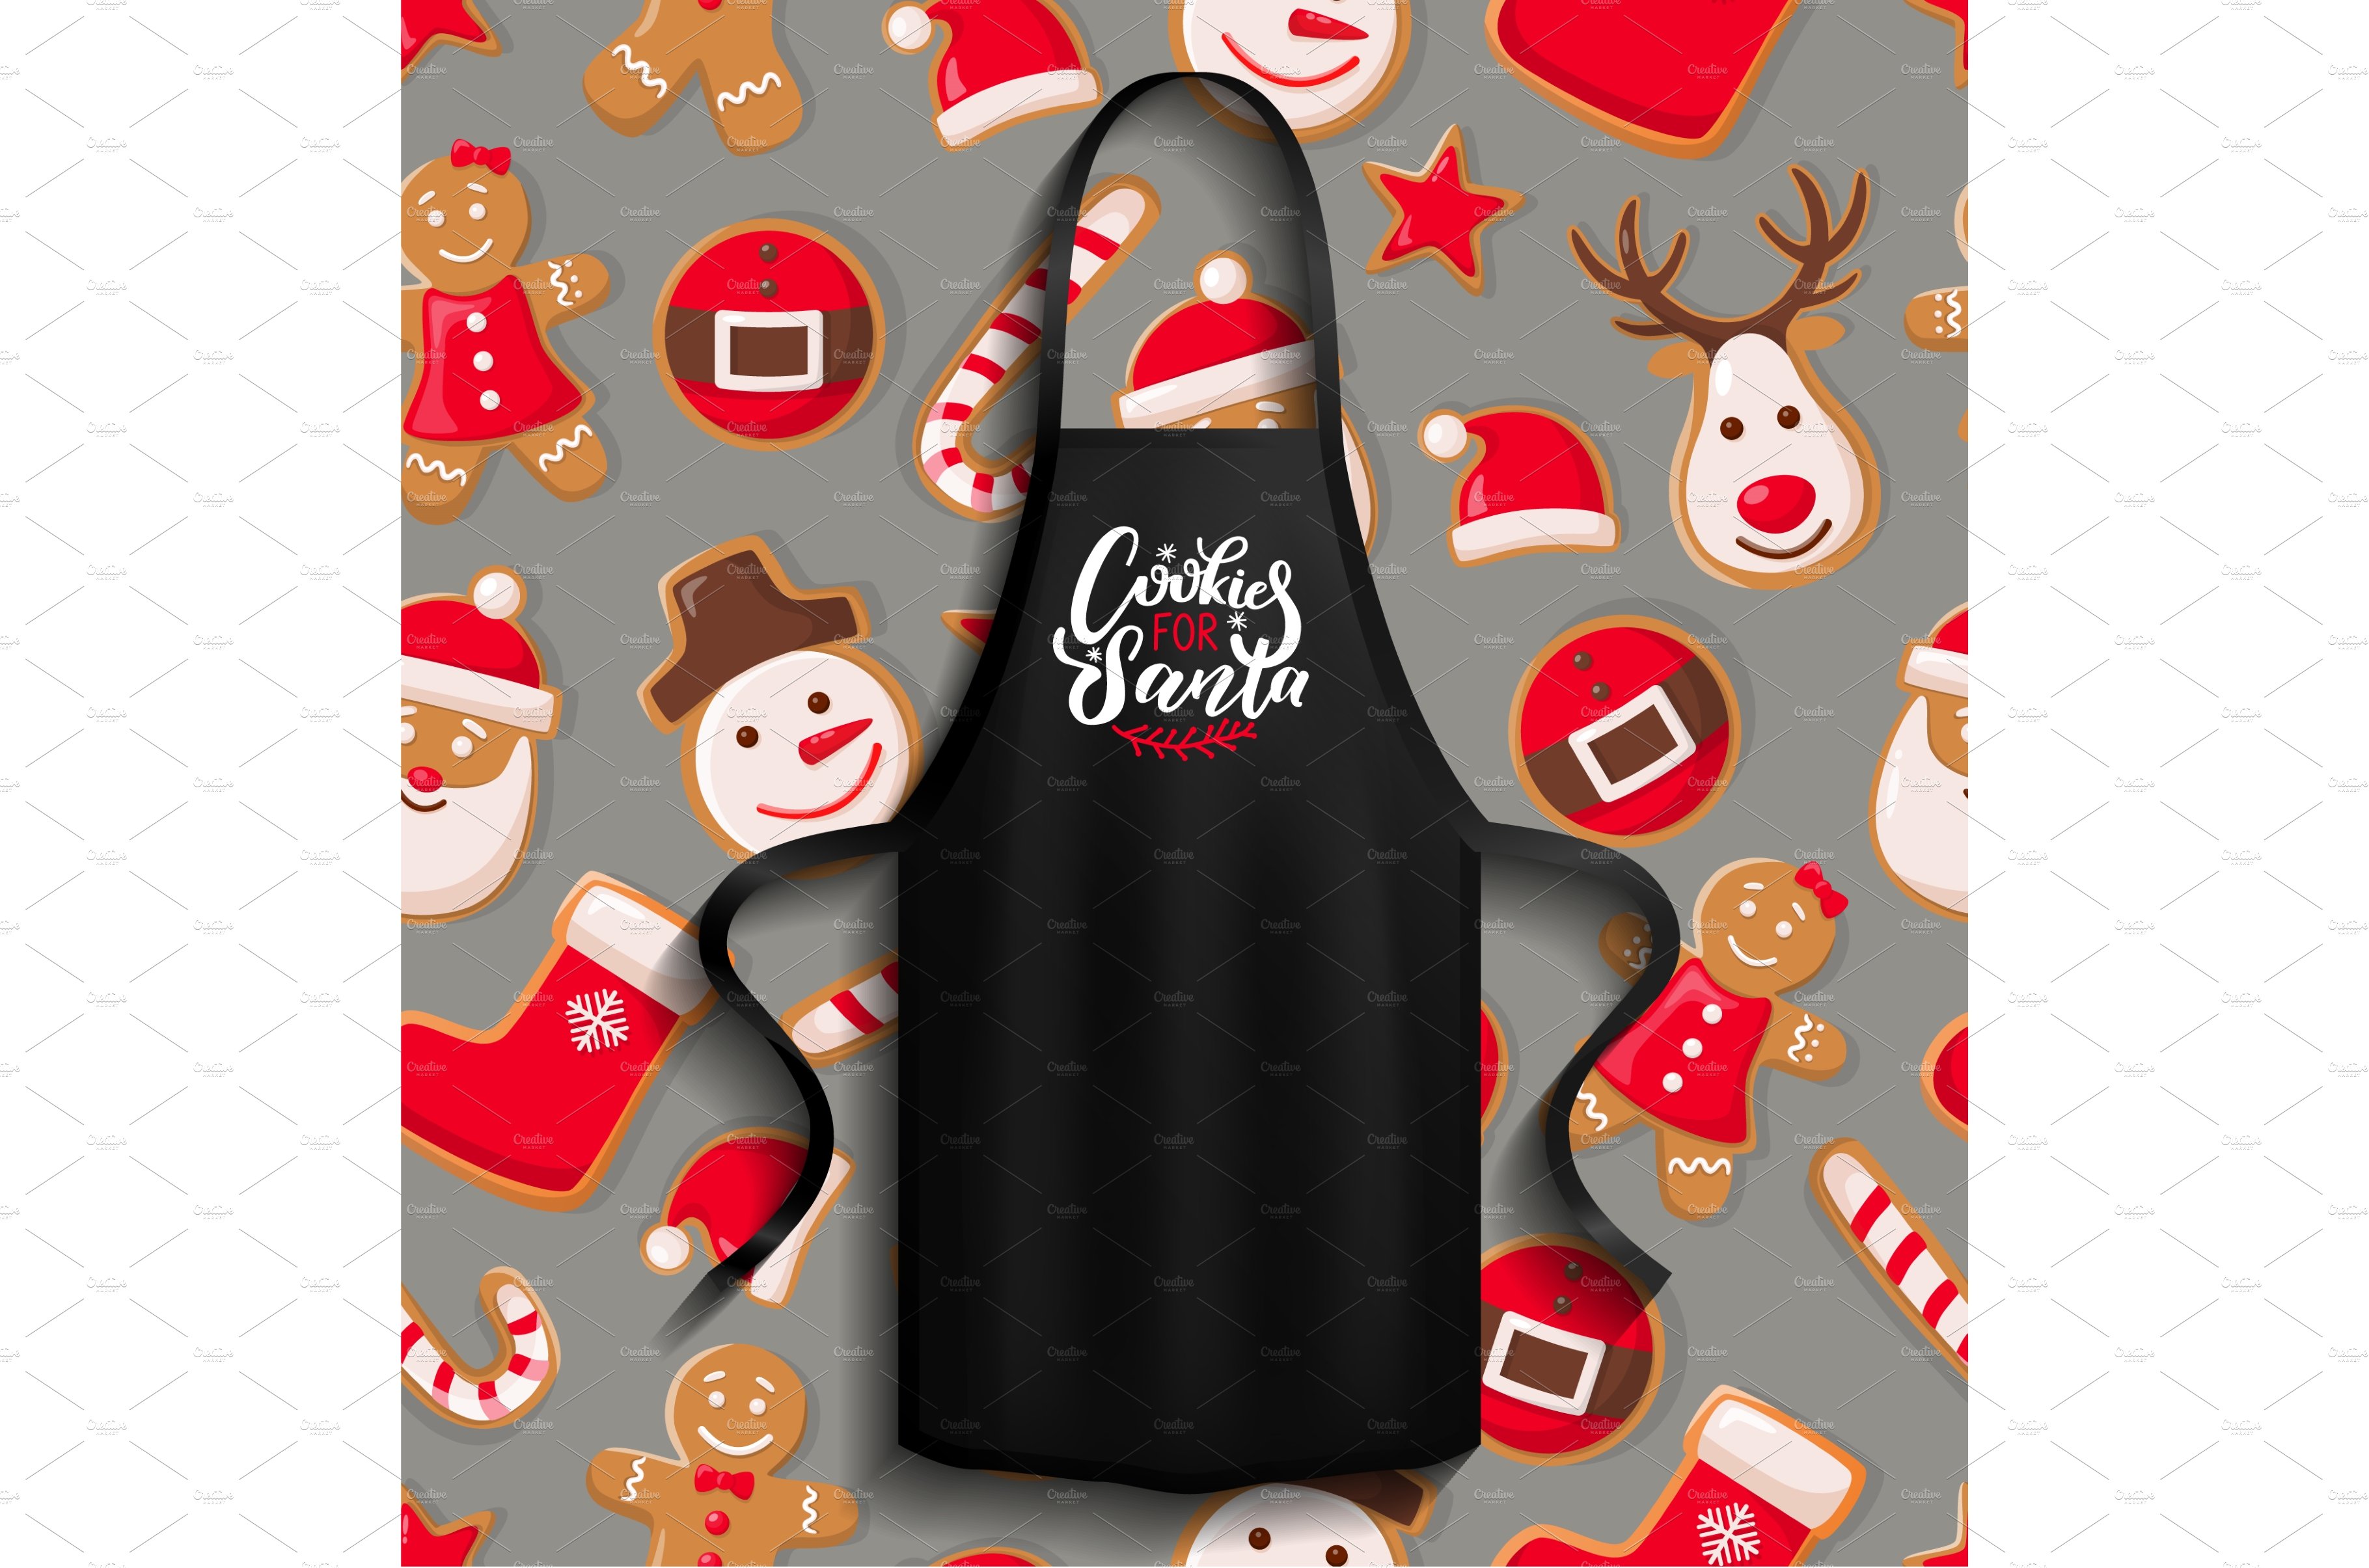 Black apron for preparing Christmas cover image.